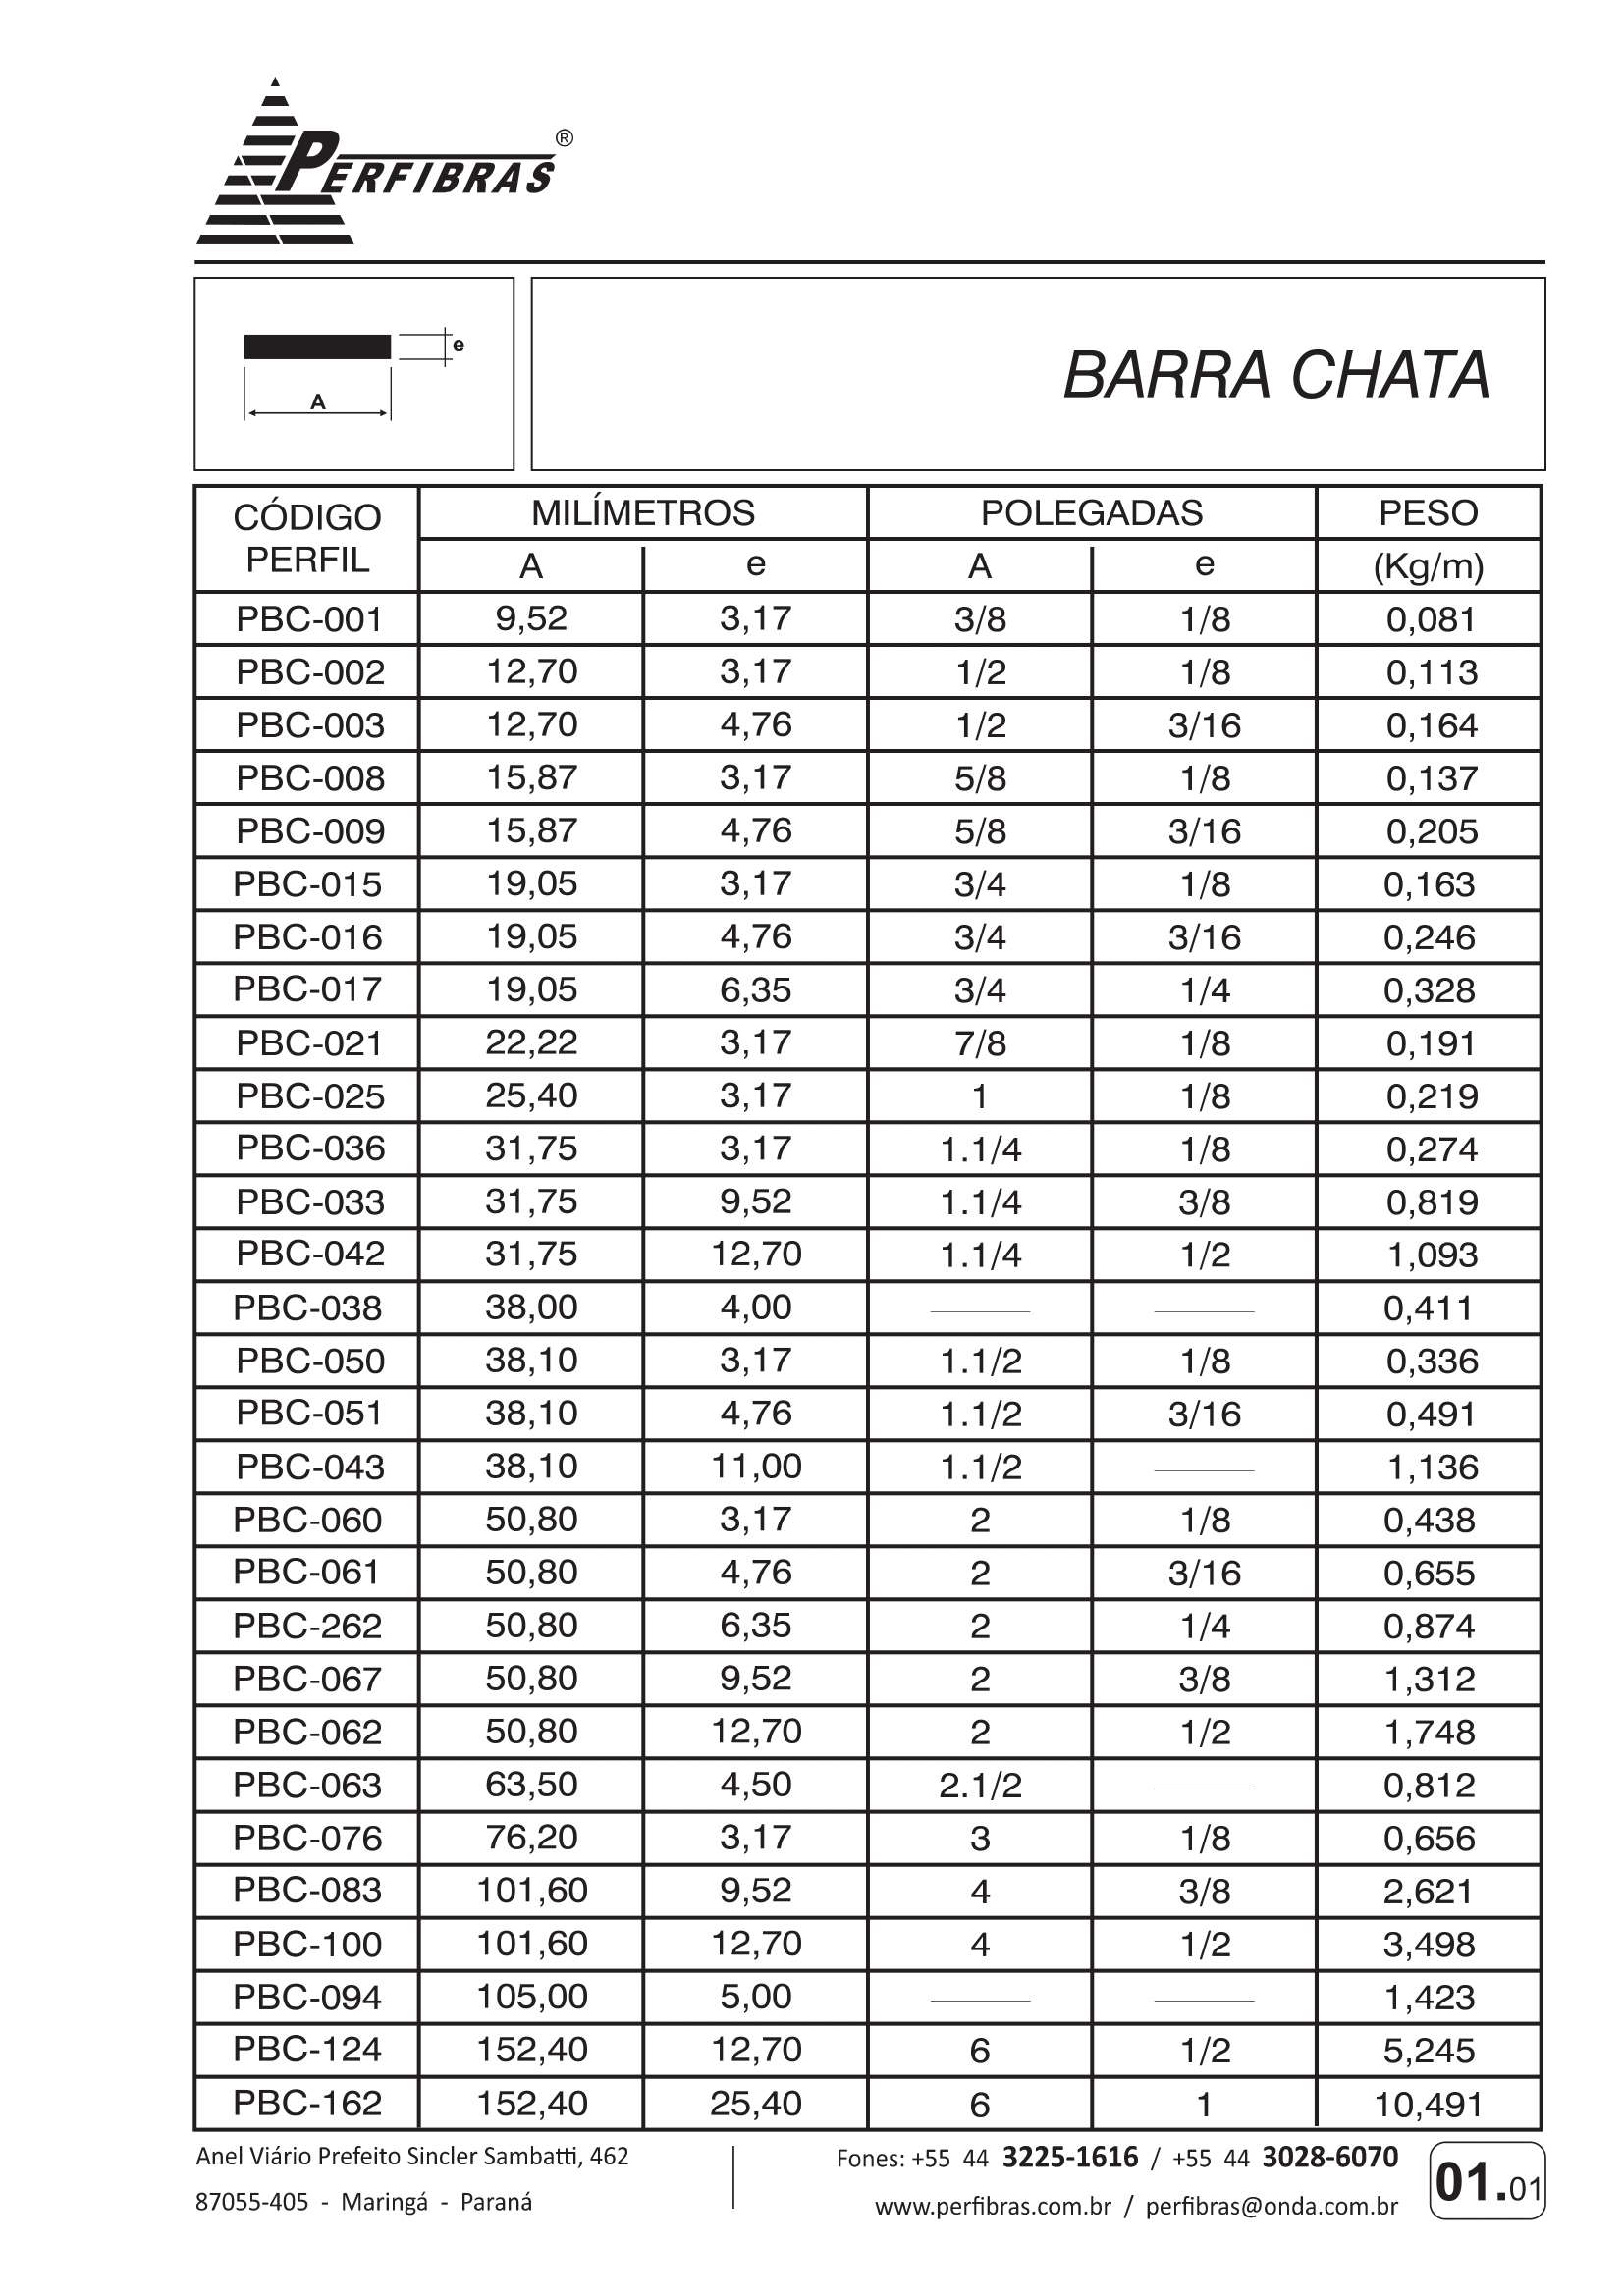 01.01 - Barra Chata (1)-1